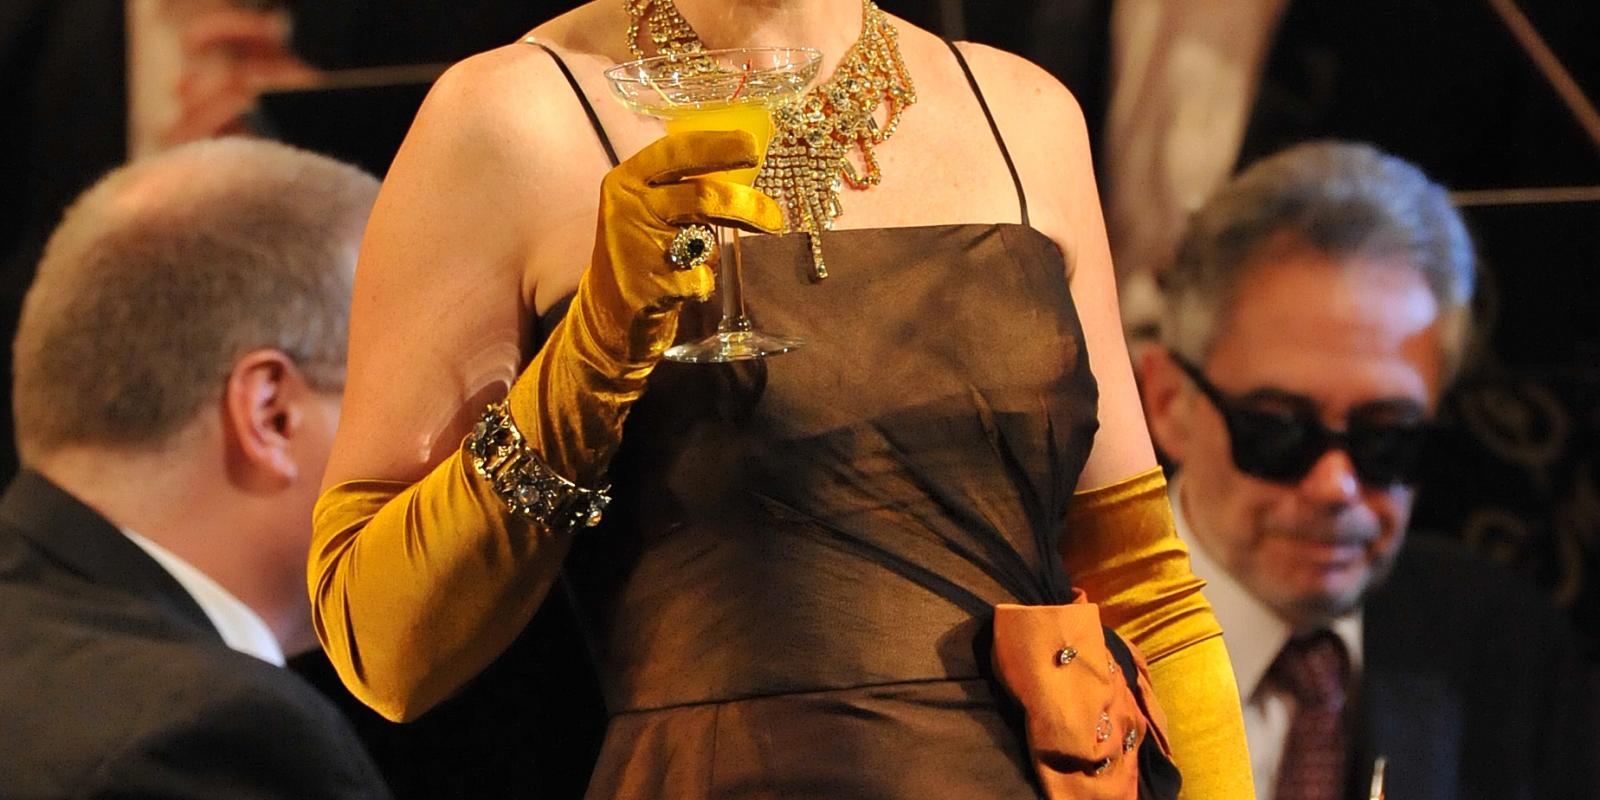 Rigoletto's Fiona Canfield's gold glove holding a martini glass